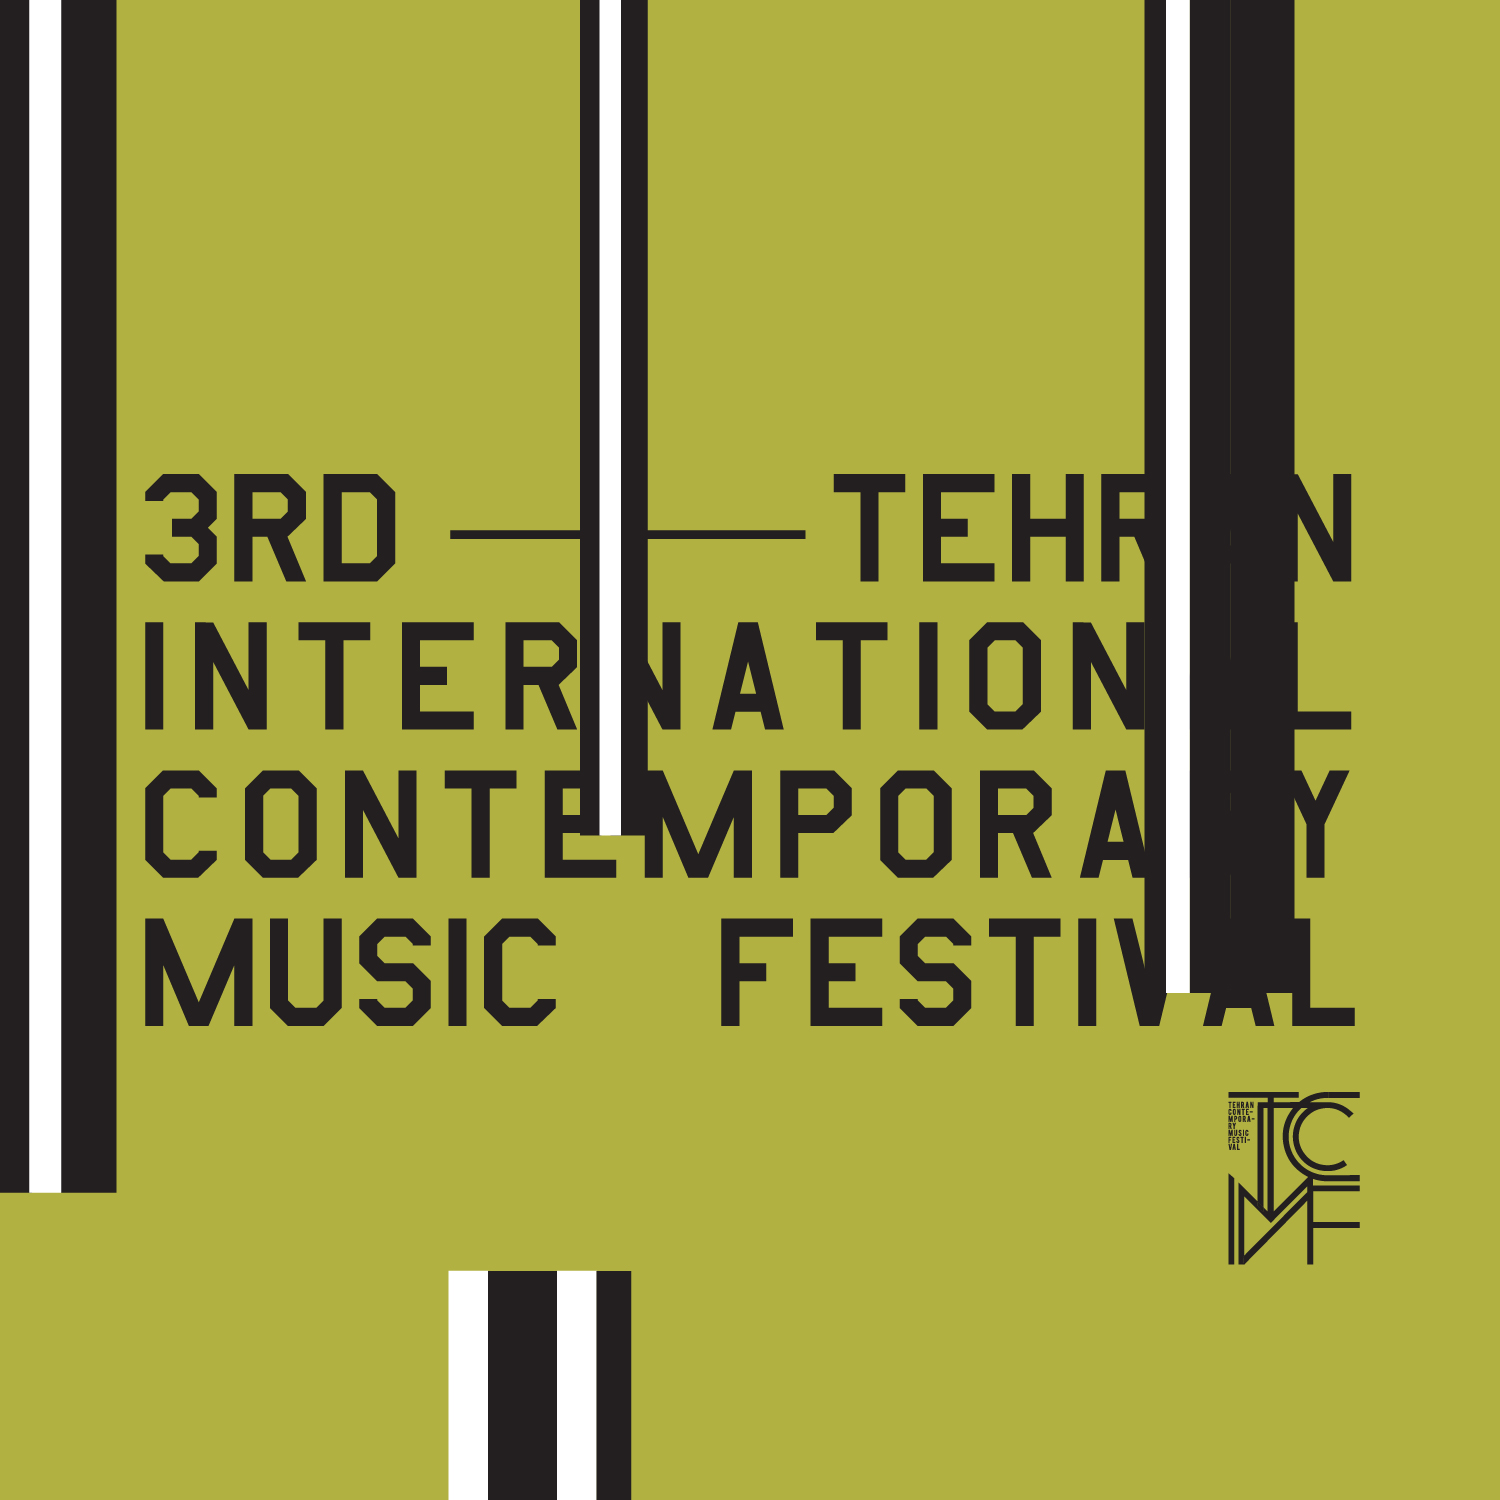 Tehran Contemporary Music Festival – Third Edition